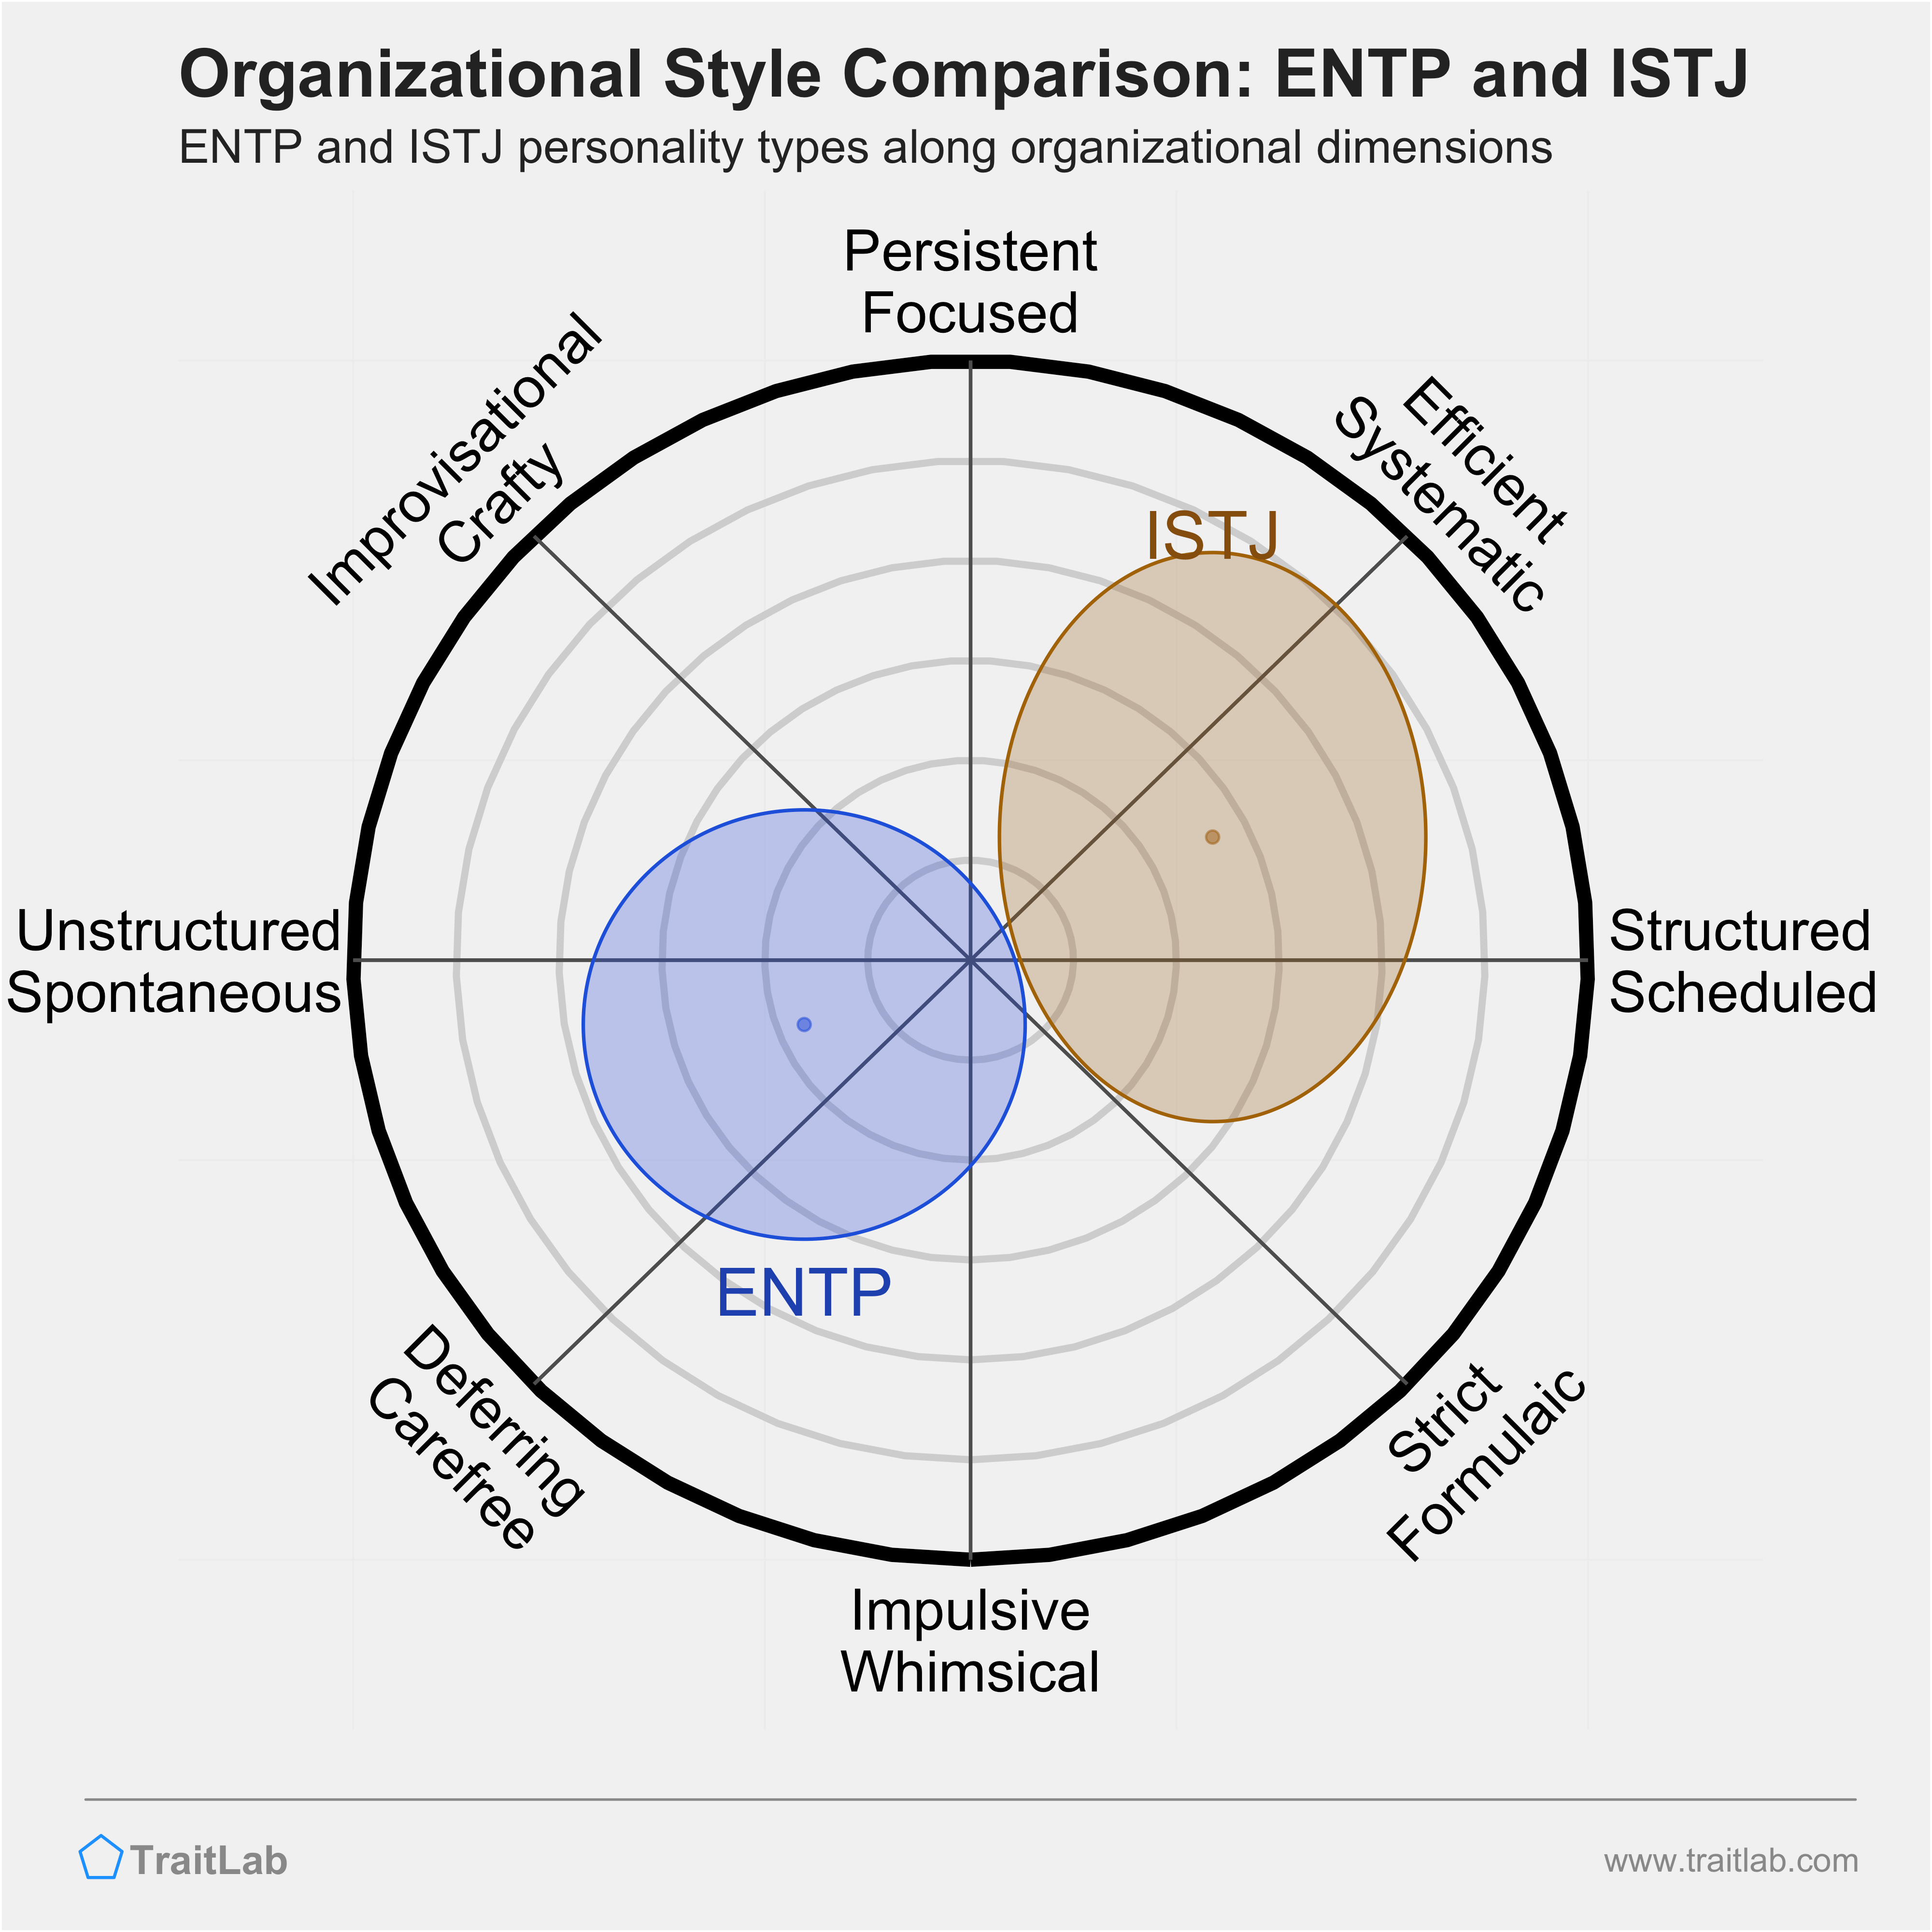 ENTP and ISTJ comparison across organizational dimensions